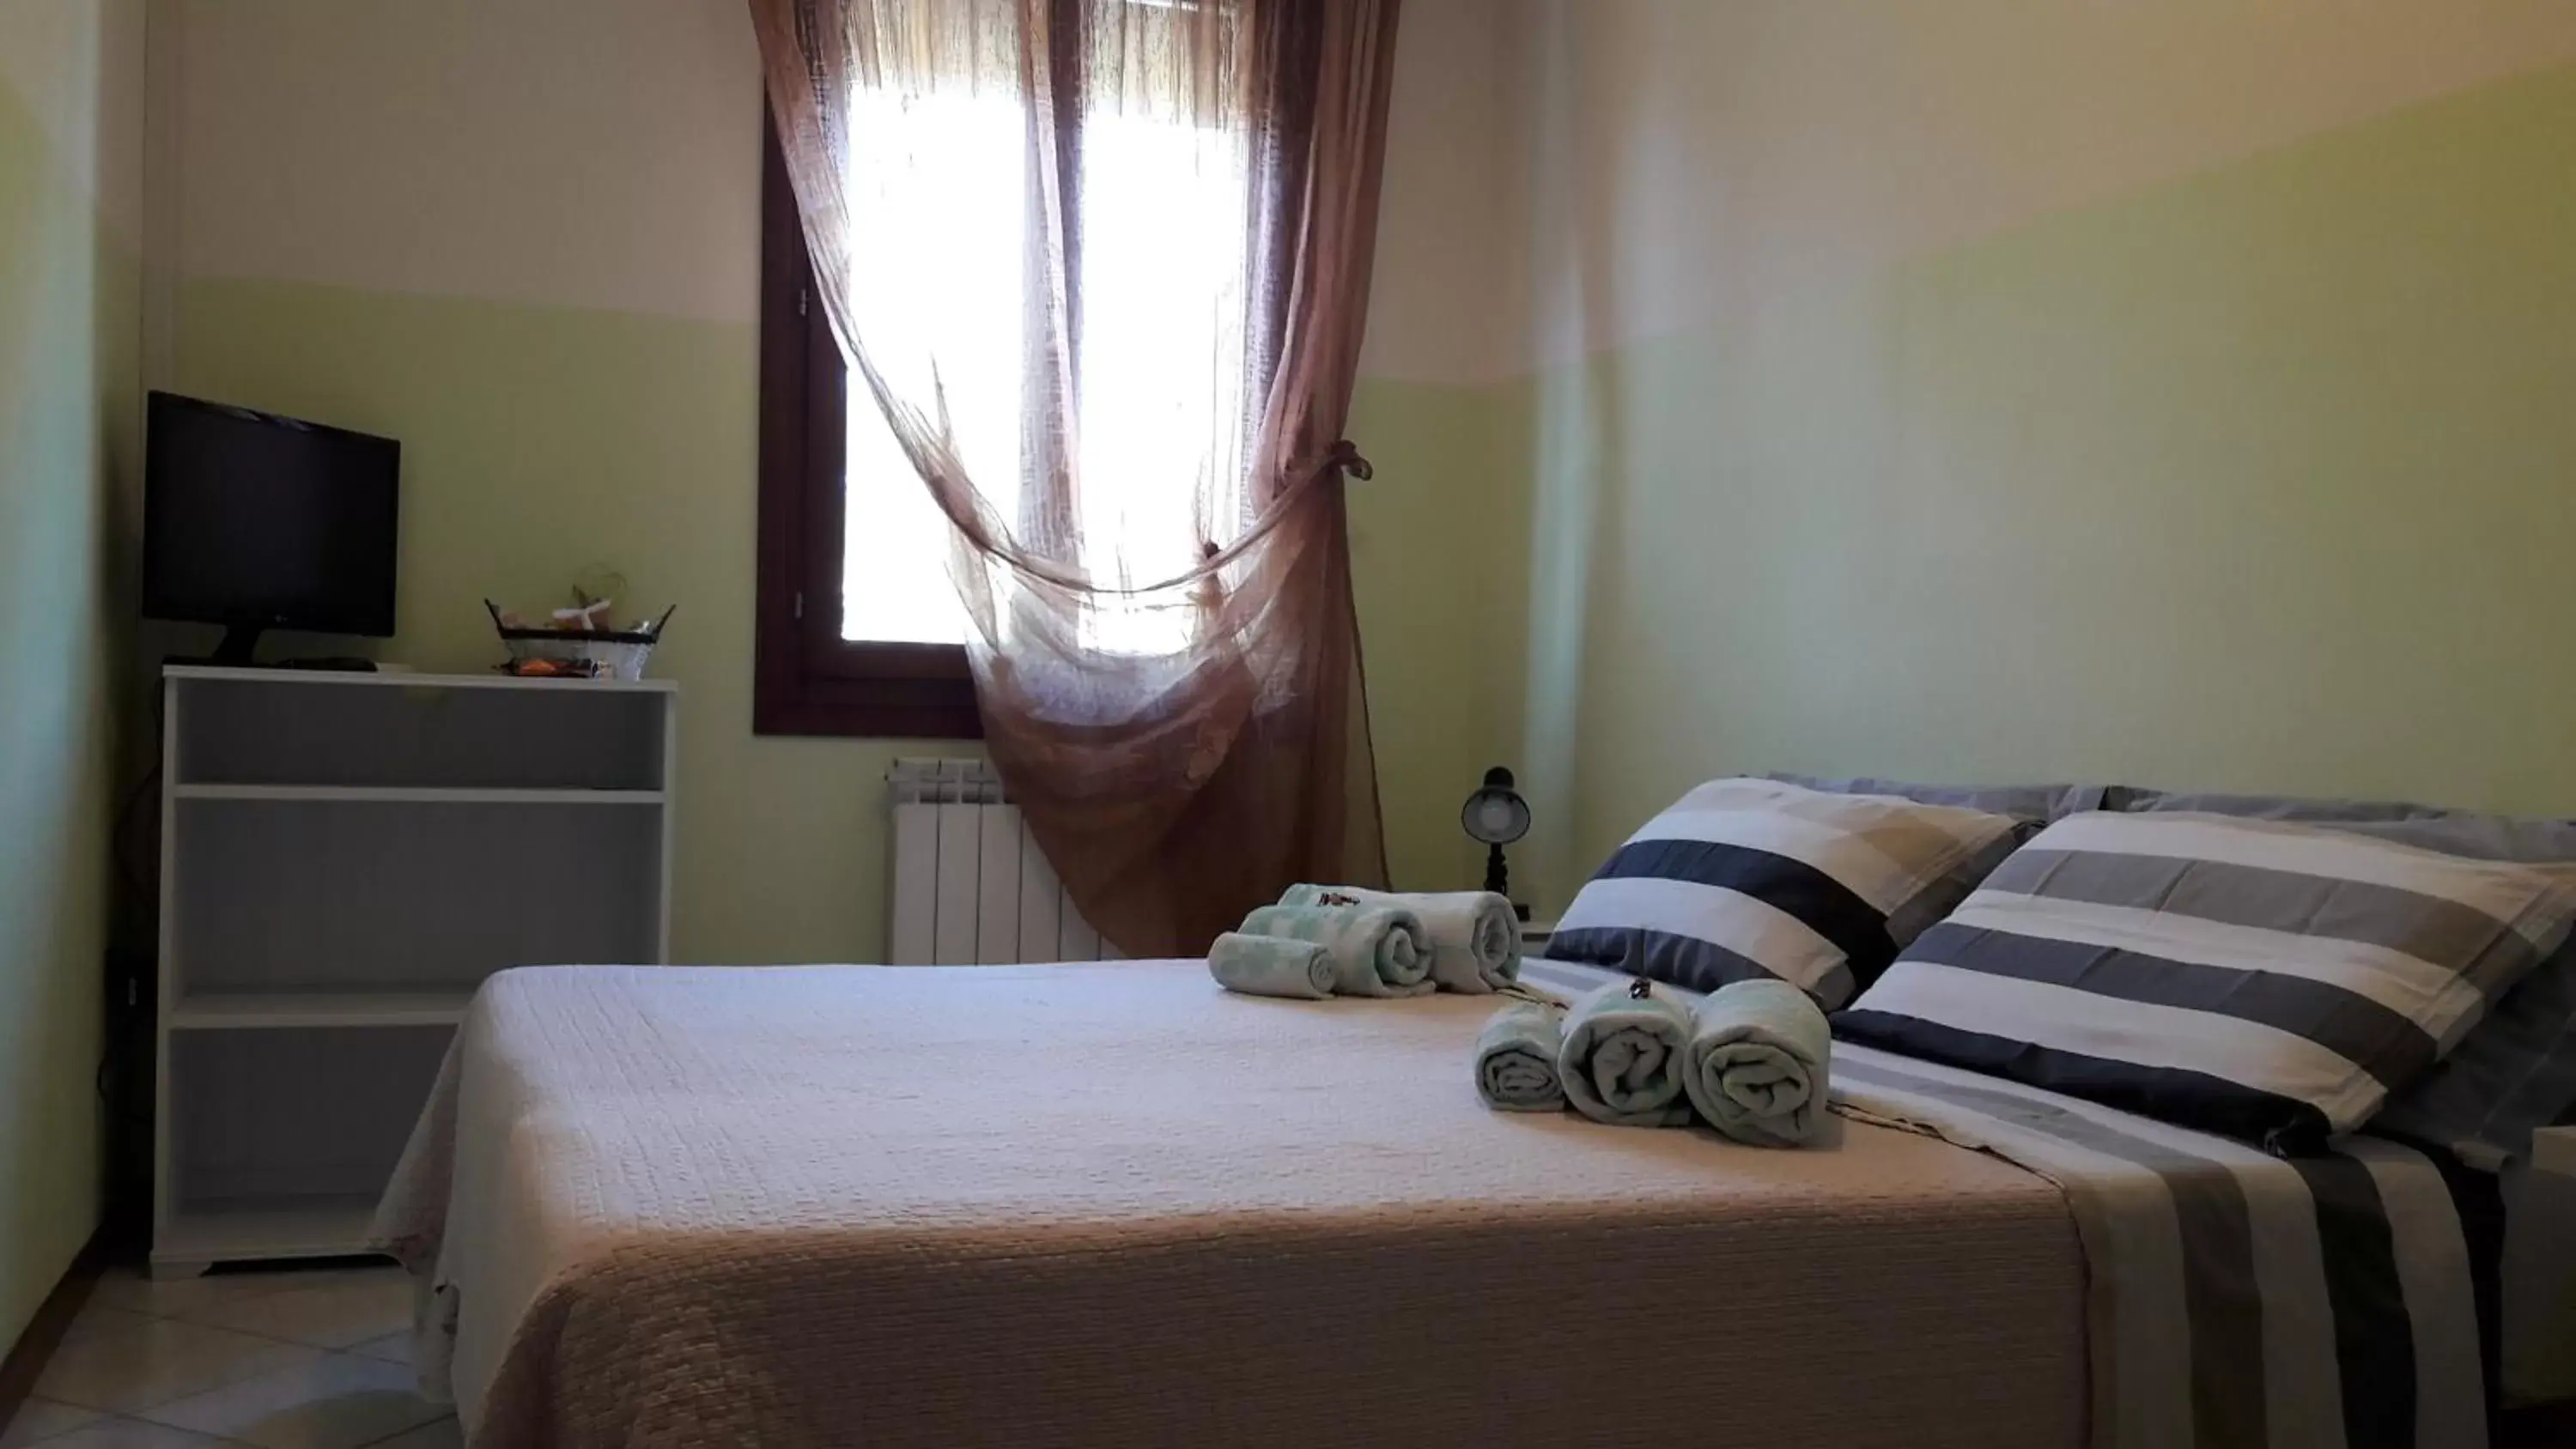 Bed, Room Photo in Adria Bella LT Z00157